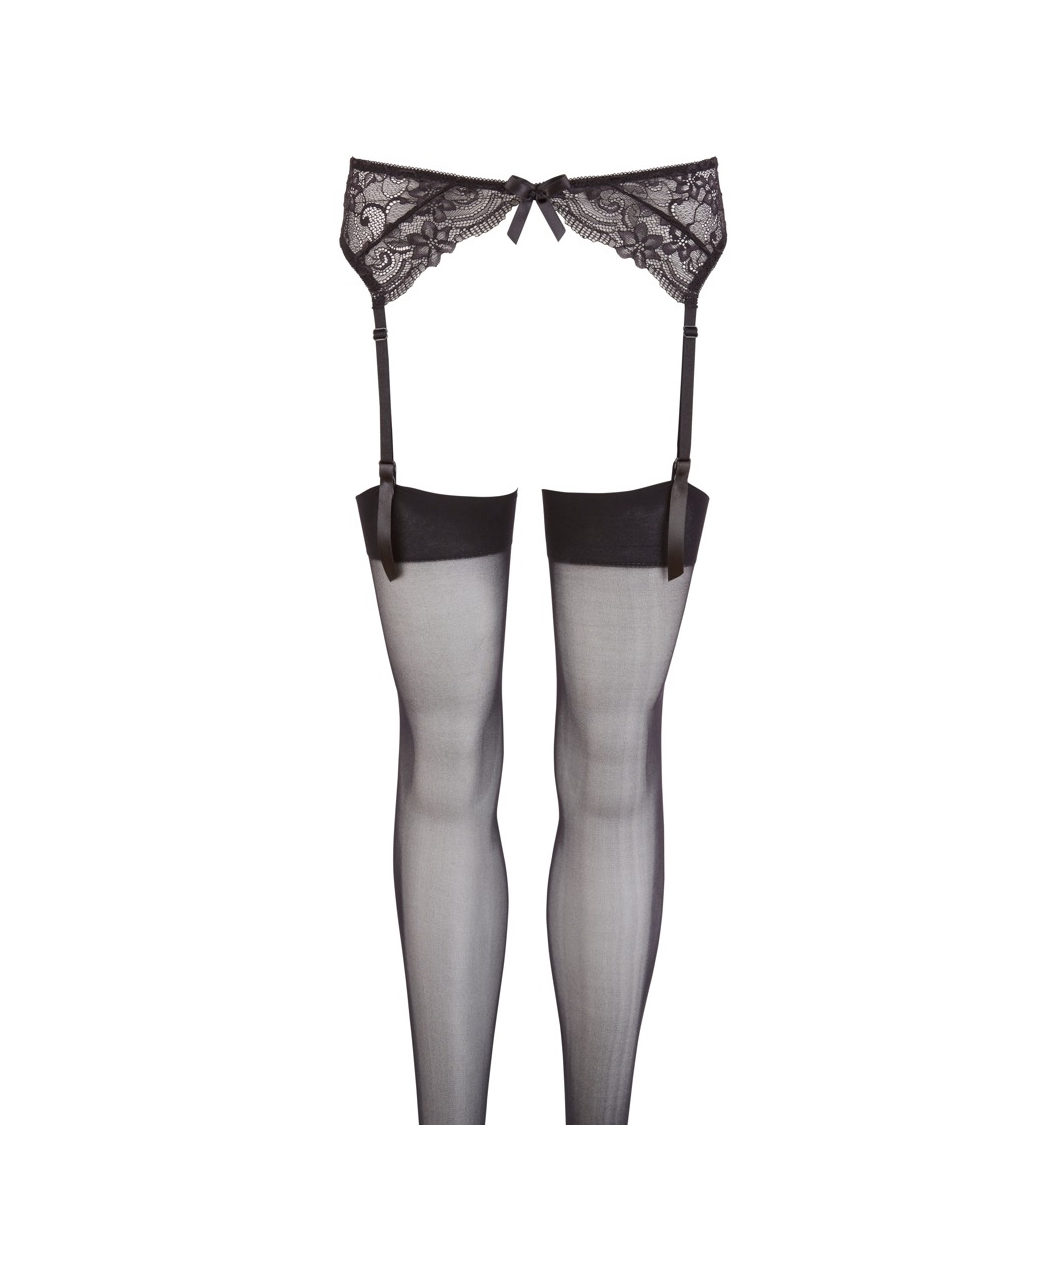 NO:XQSE black lace garter belt with stockings